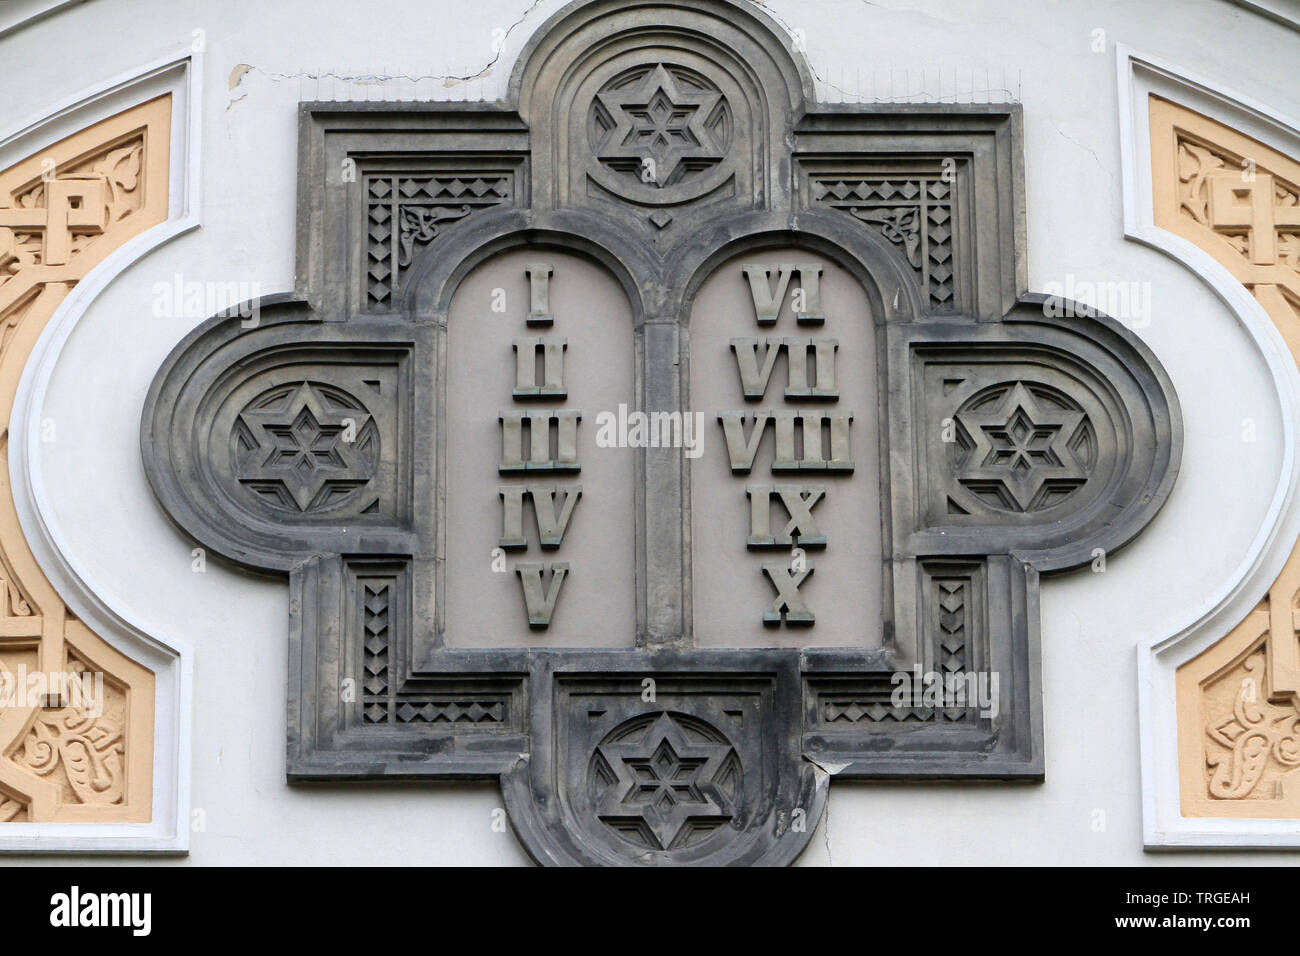 Les 10 commandements. Sinagoga Espagnole. Praga. Repubblica ceca. Foto Stock